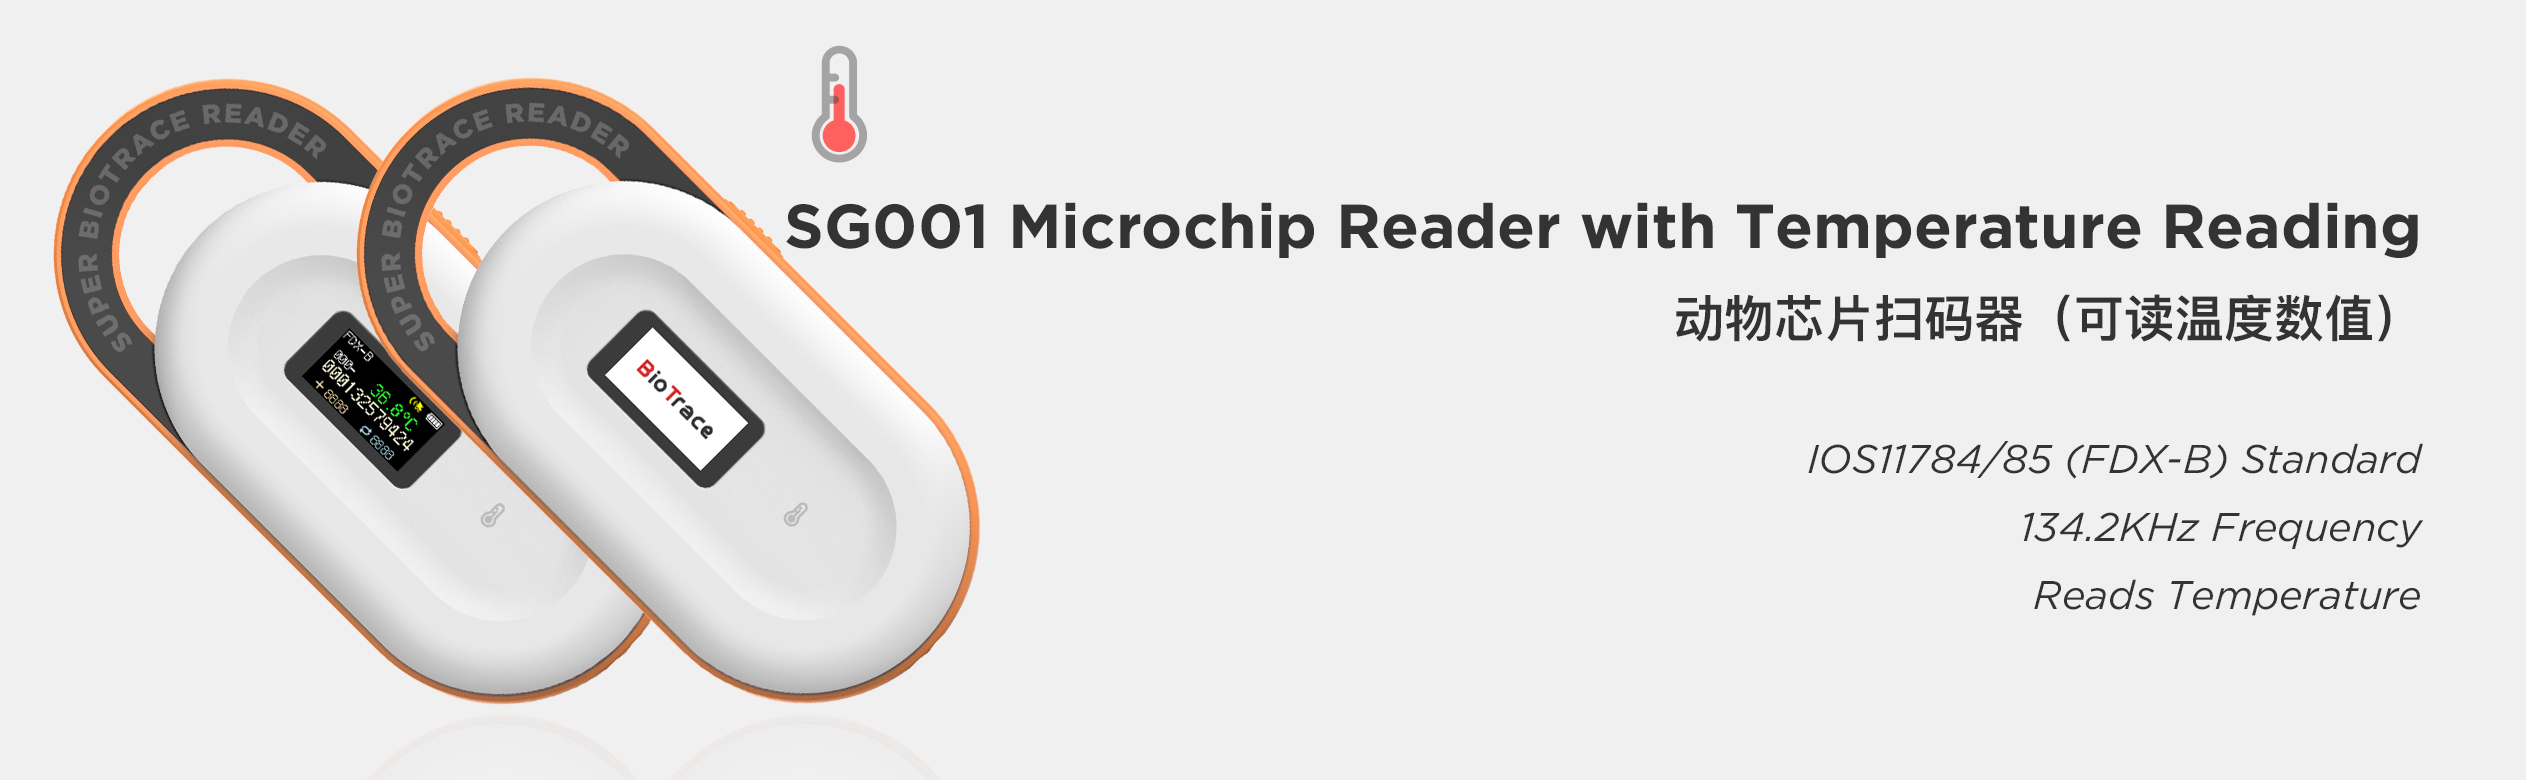 SG001 Temperature Microchip Reader